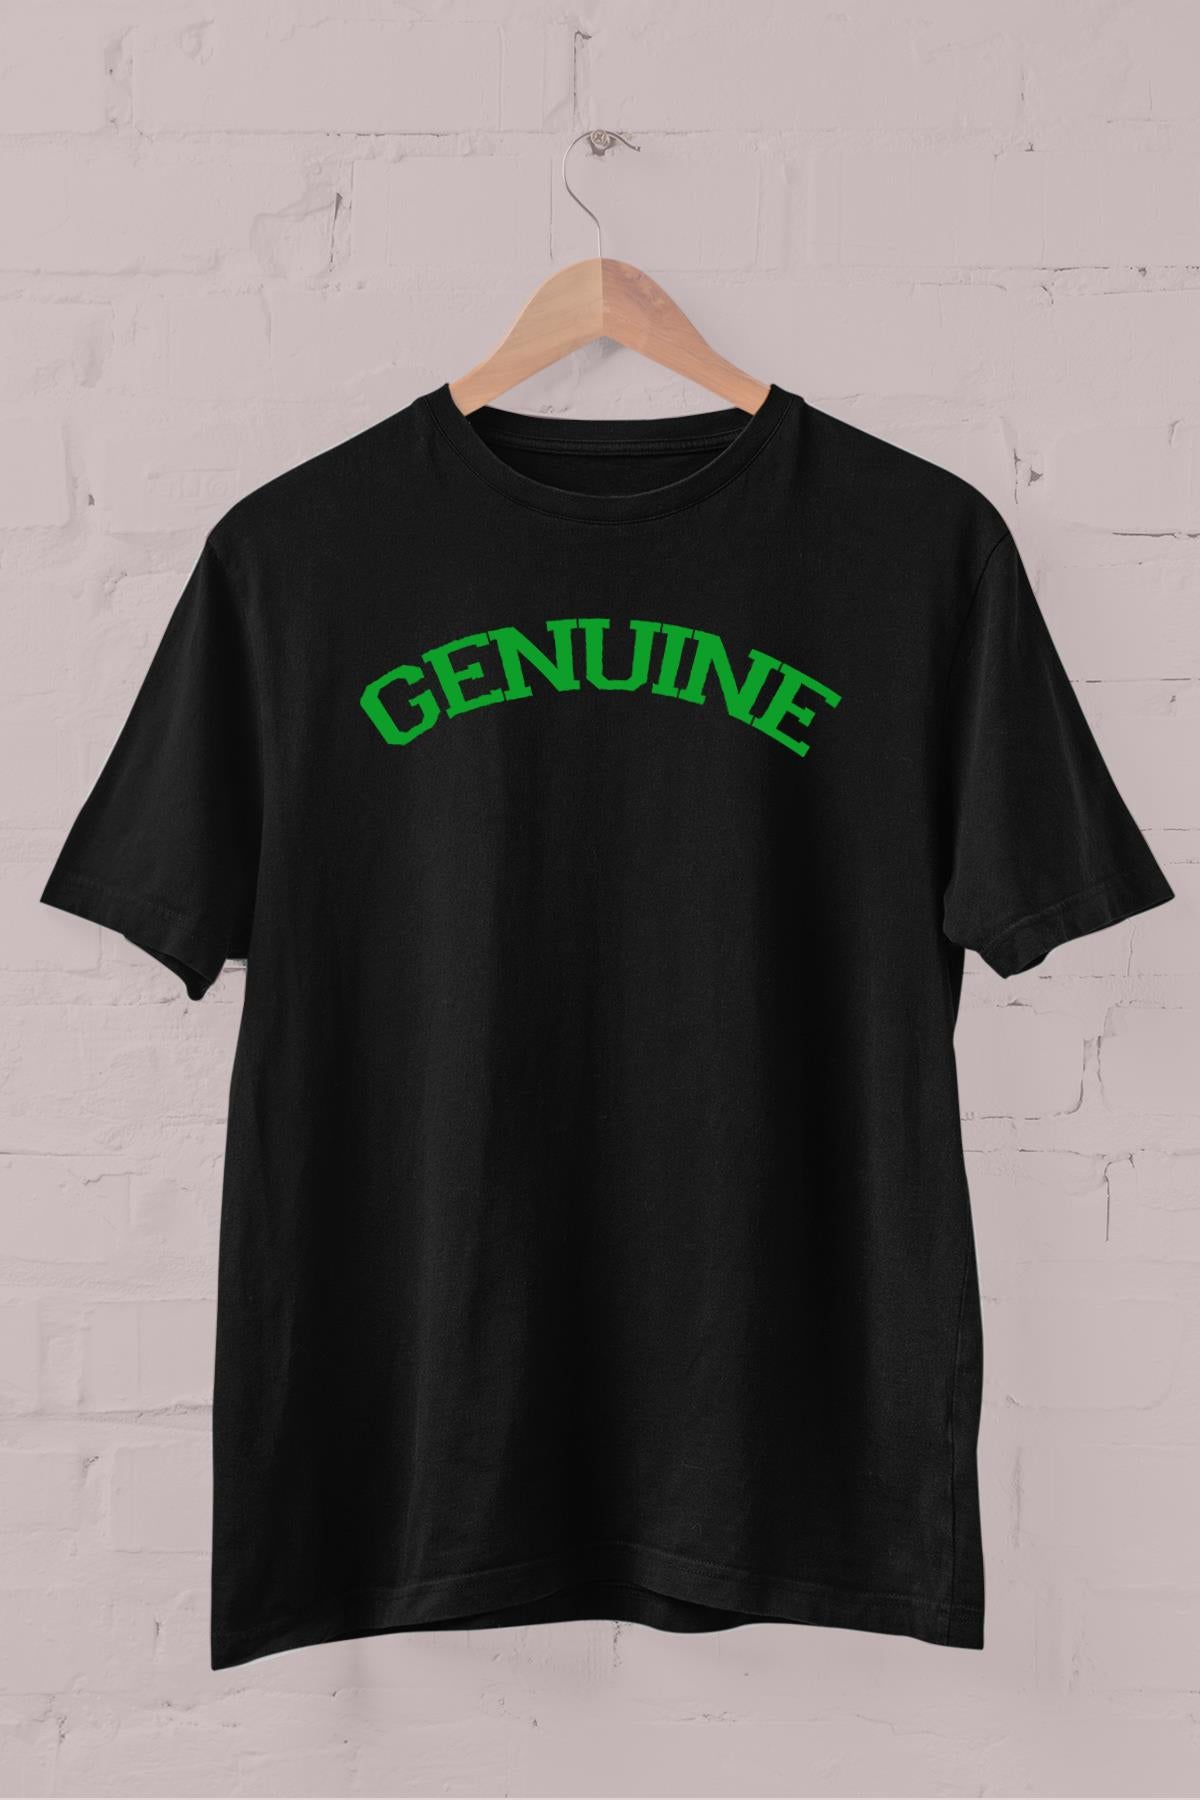 Geniue printed Crew Neck men's t -shirt